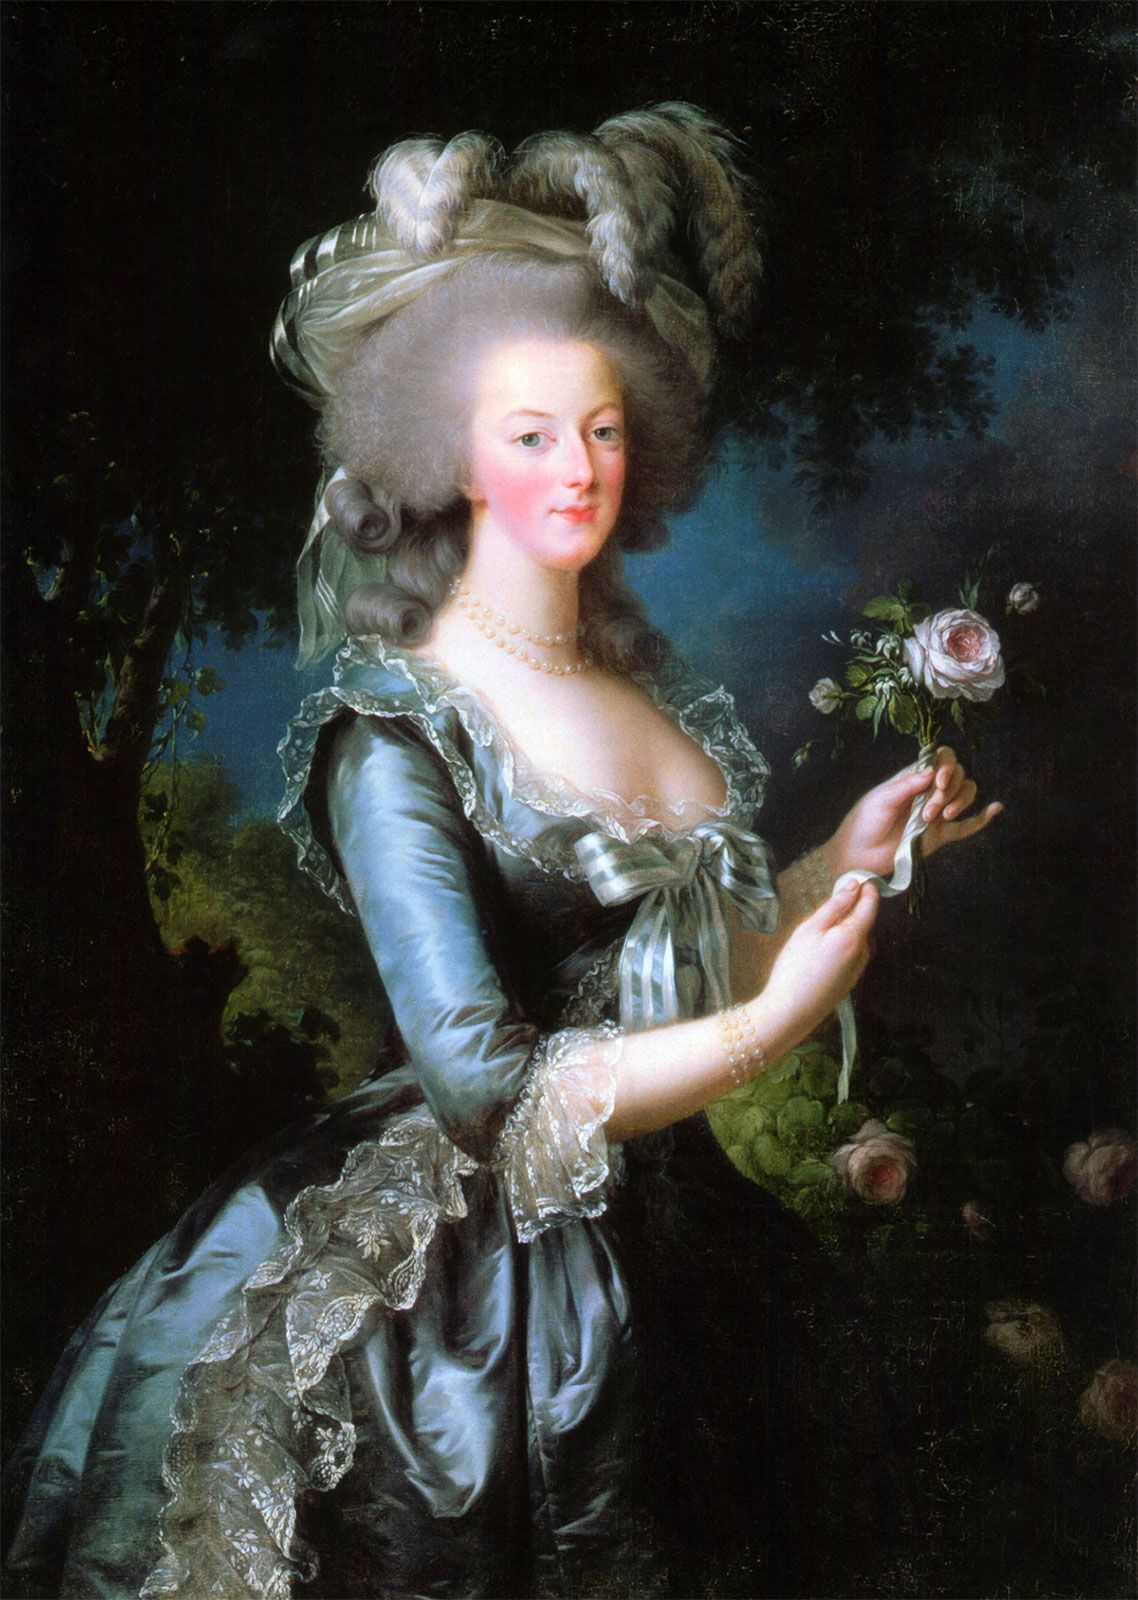 Marie Antoinette Biography, Net Worth, Age, Career, Wikipedia